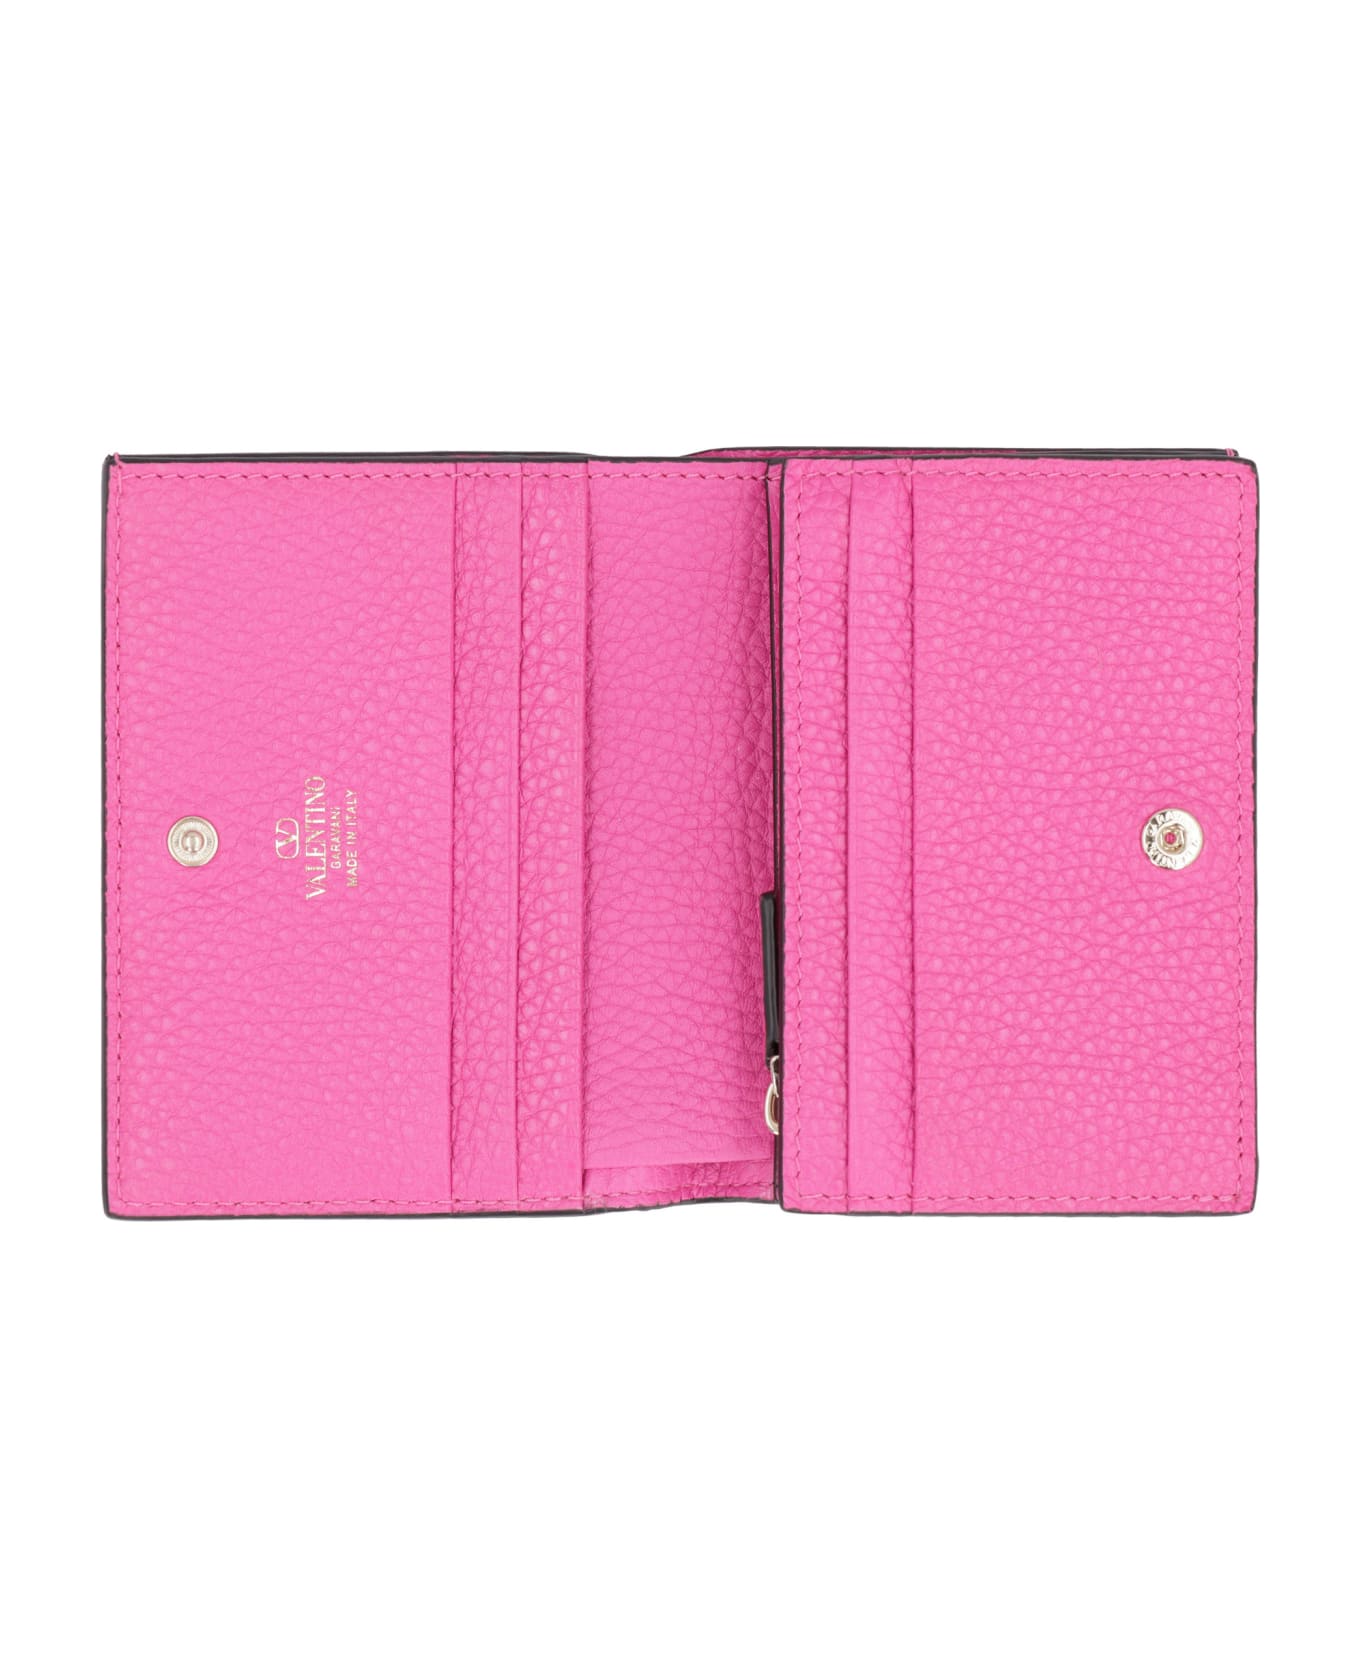 Valentino Garavani - Rockstud Small Leather Flap-over Wallet - Pink Pp